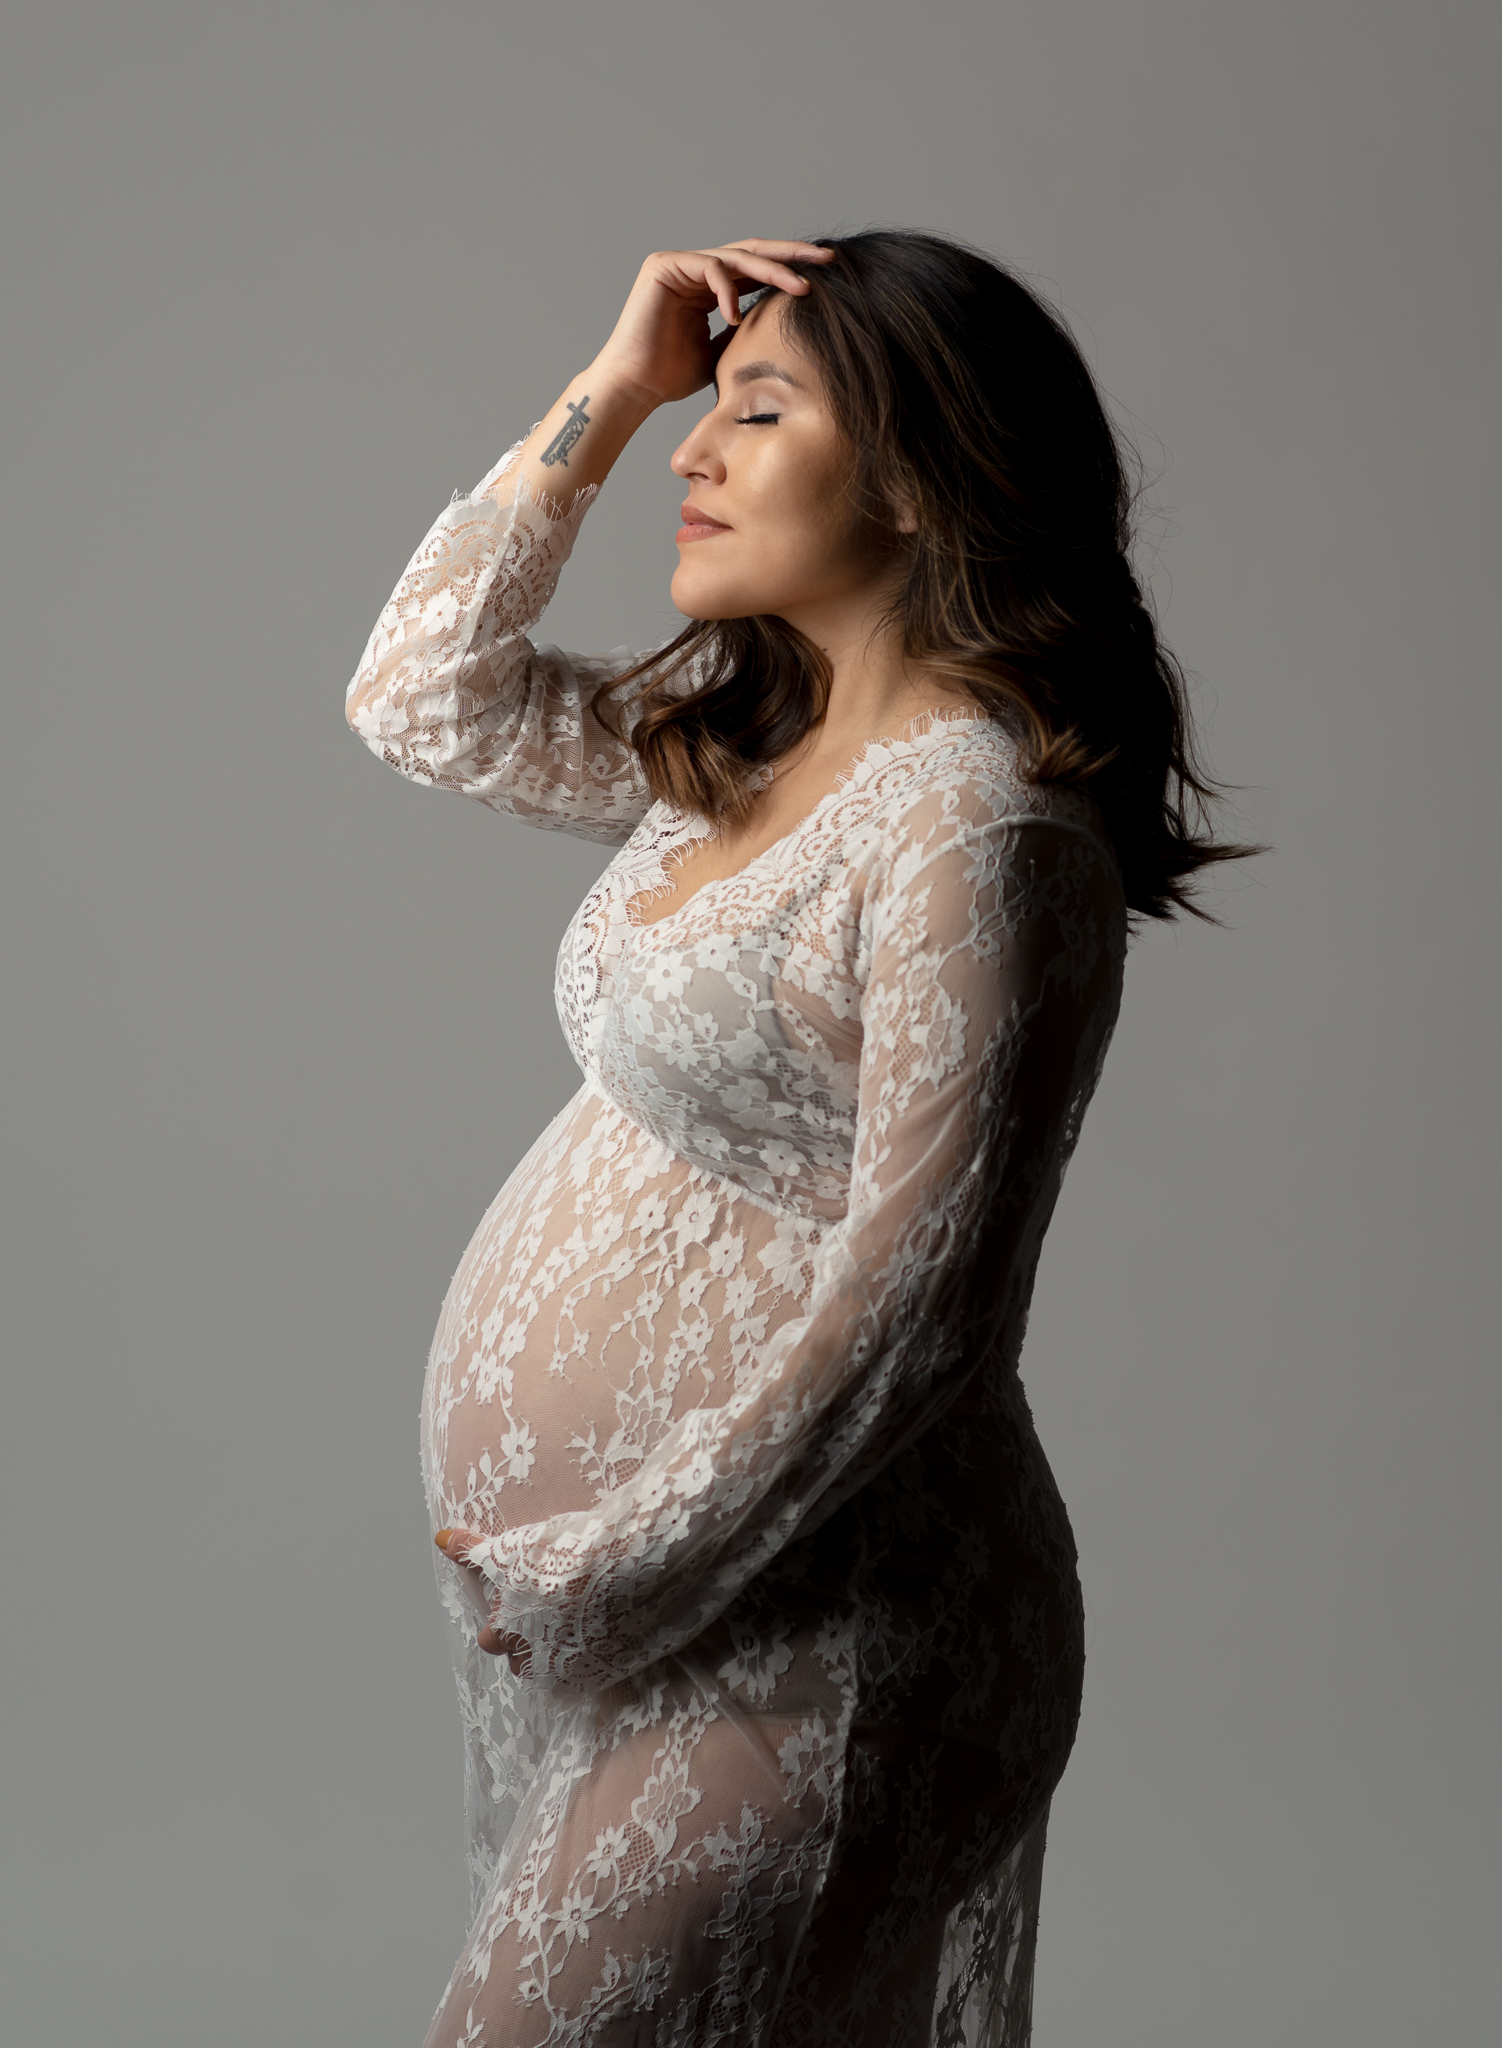 studio maternity portrait of woman in white lace dress